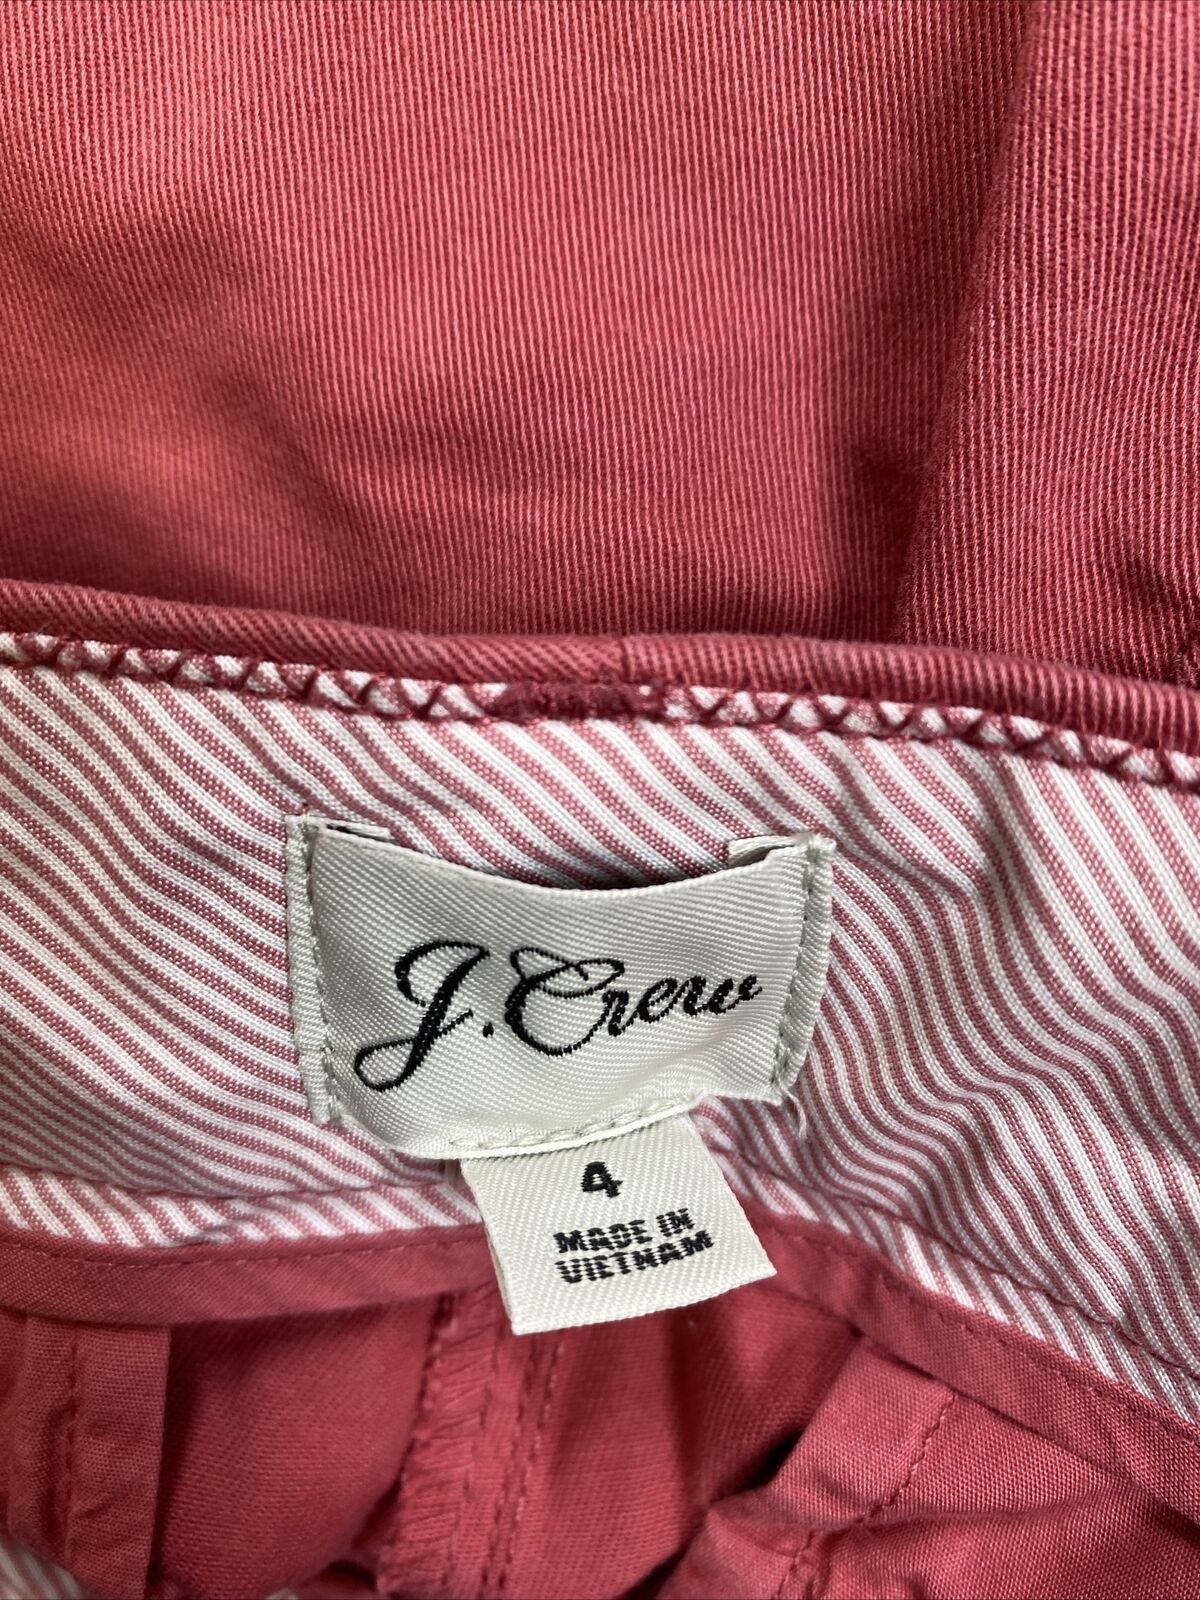 J.Crew Women's Pink/Salmon Cotton Chino Shorts - 4